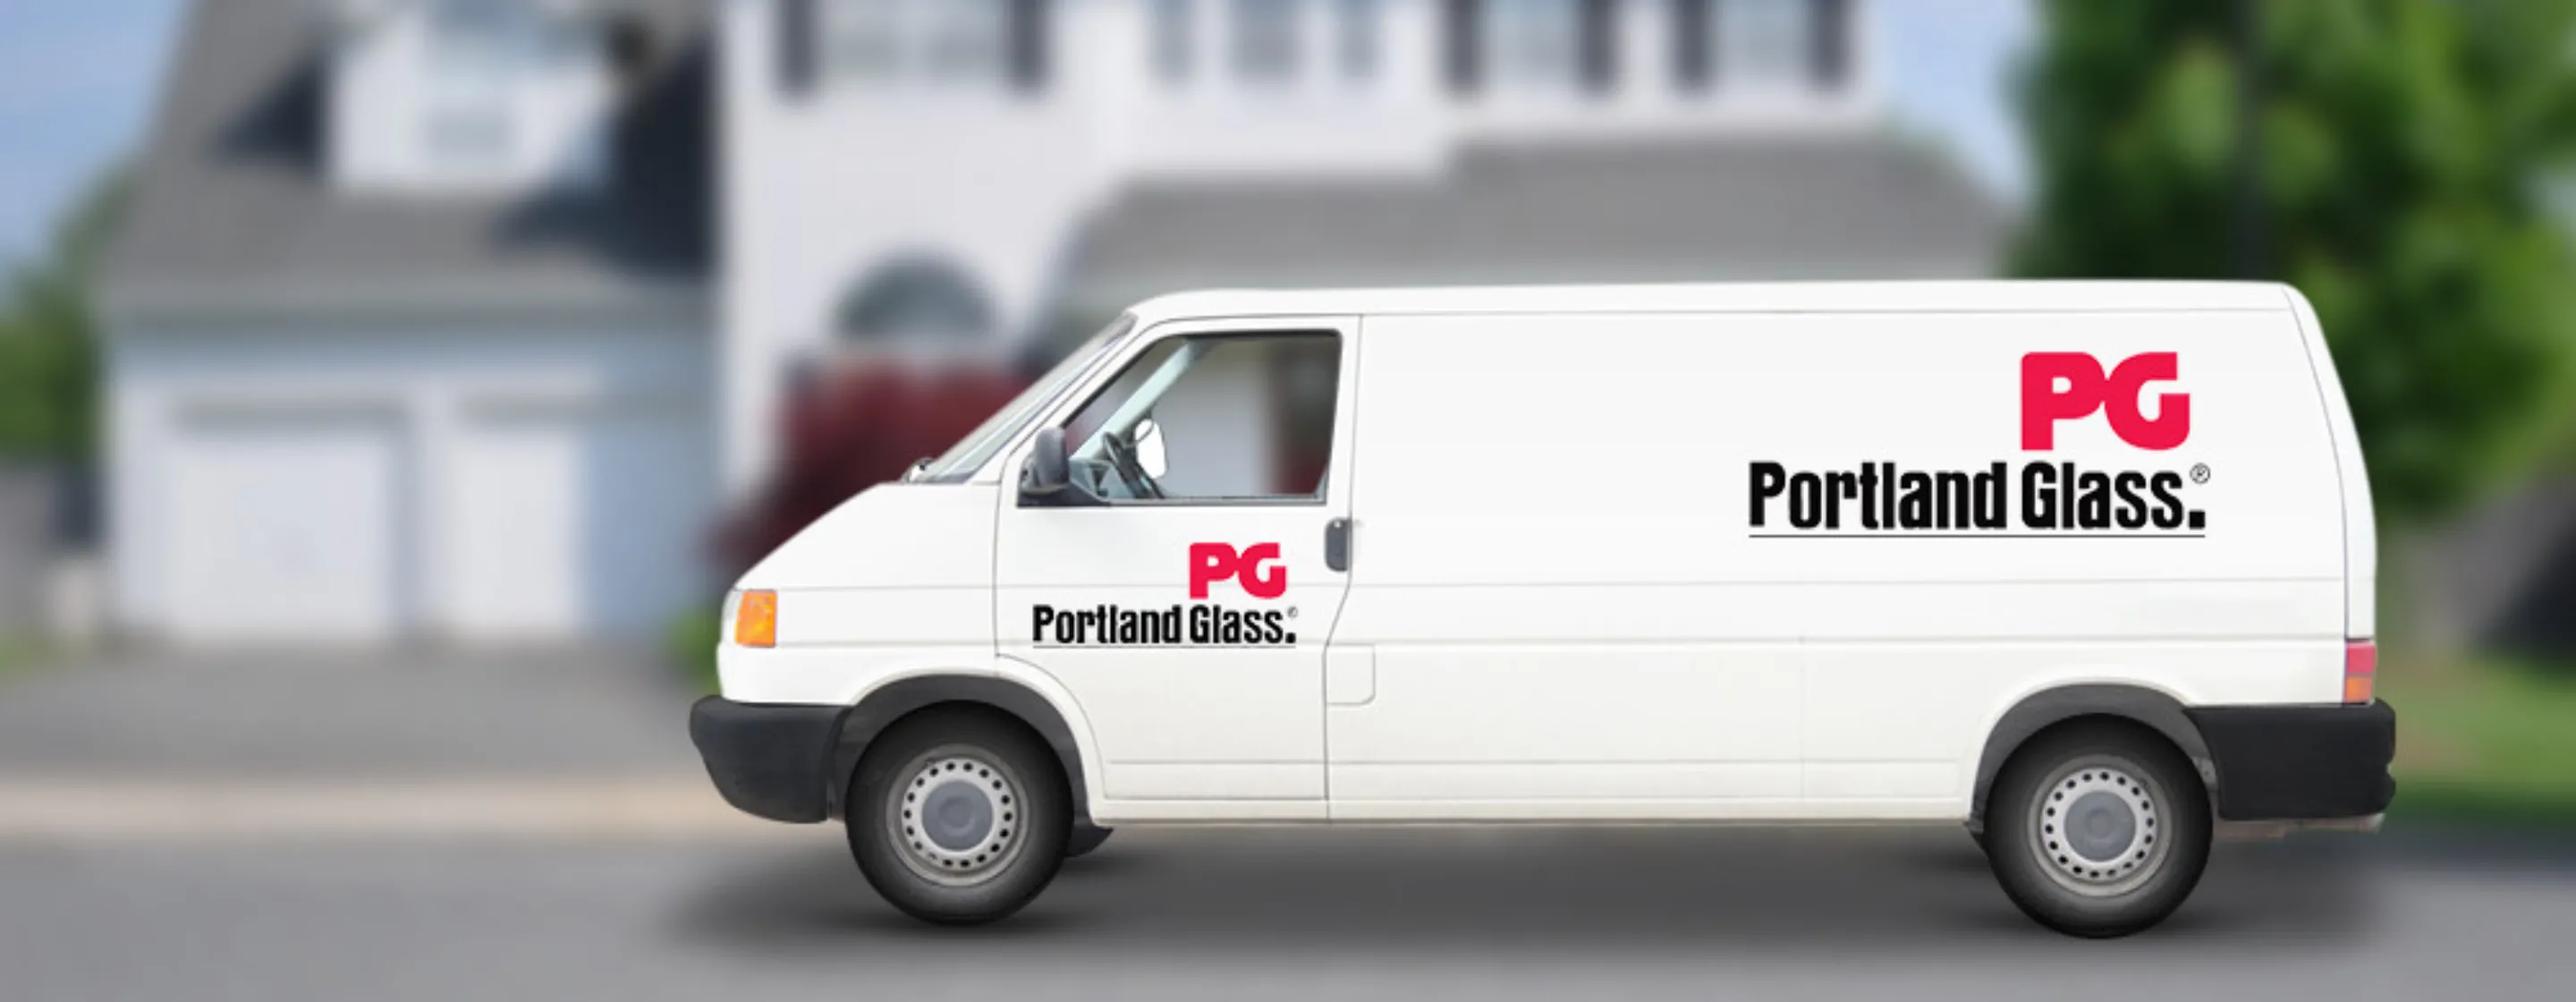 Branded Portland Glass truck